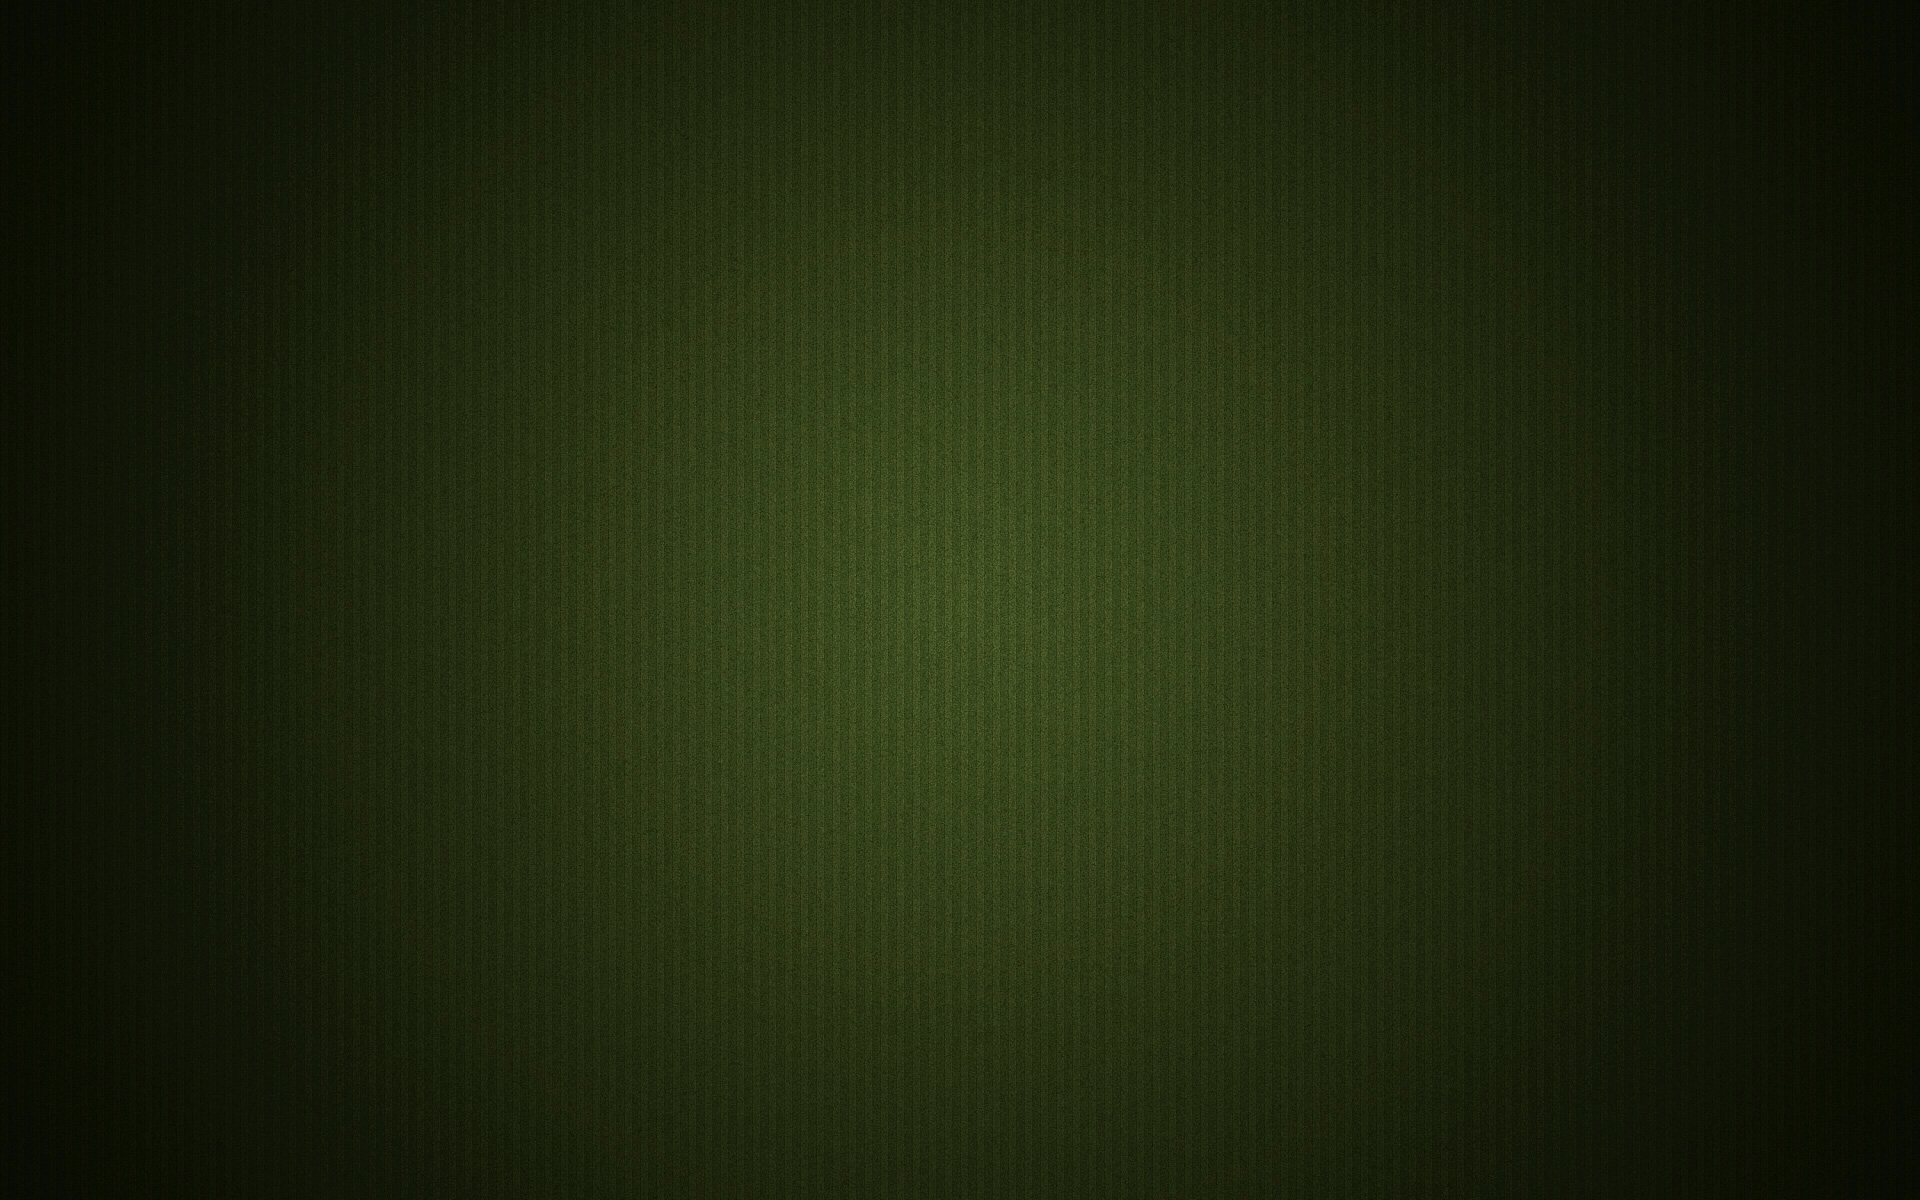 green grass texture, background, download photo, texture, background, green grass